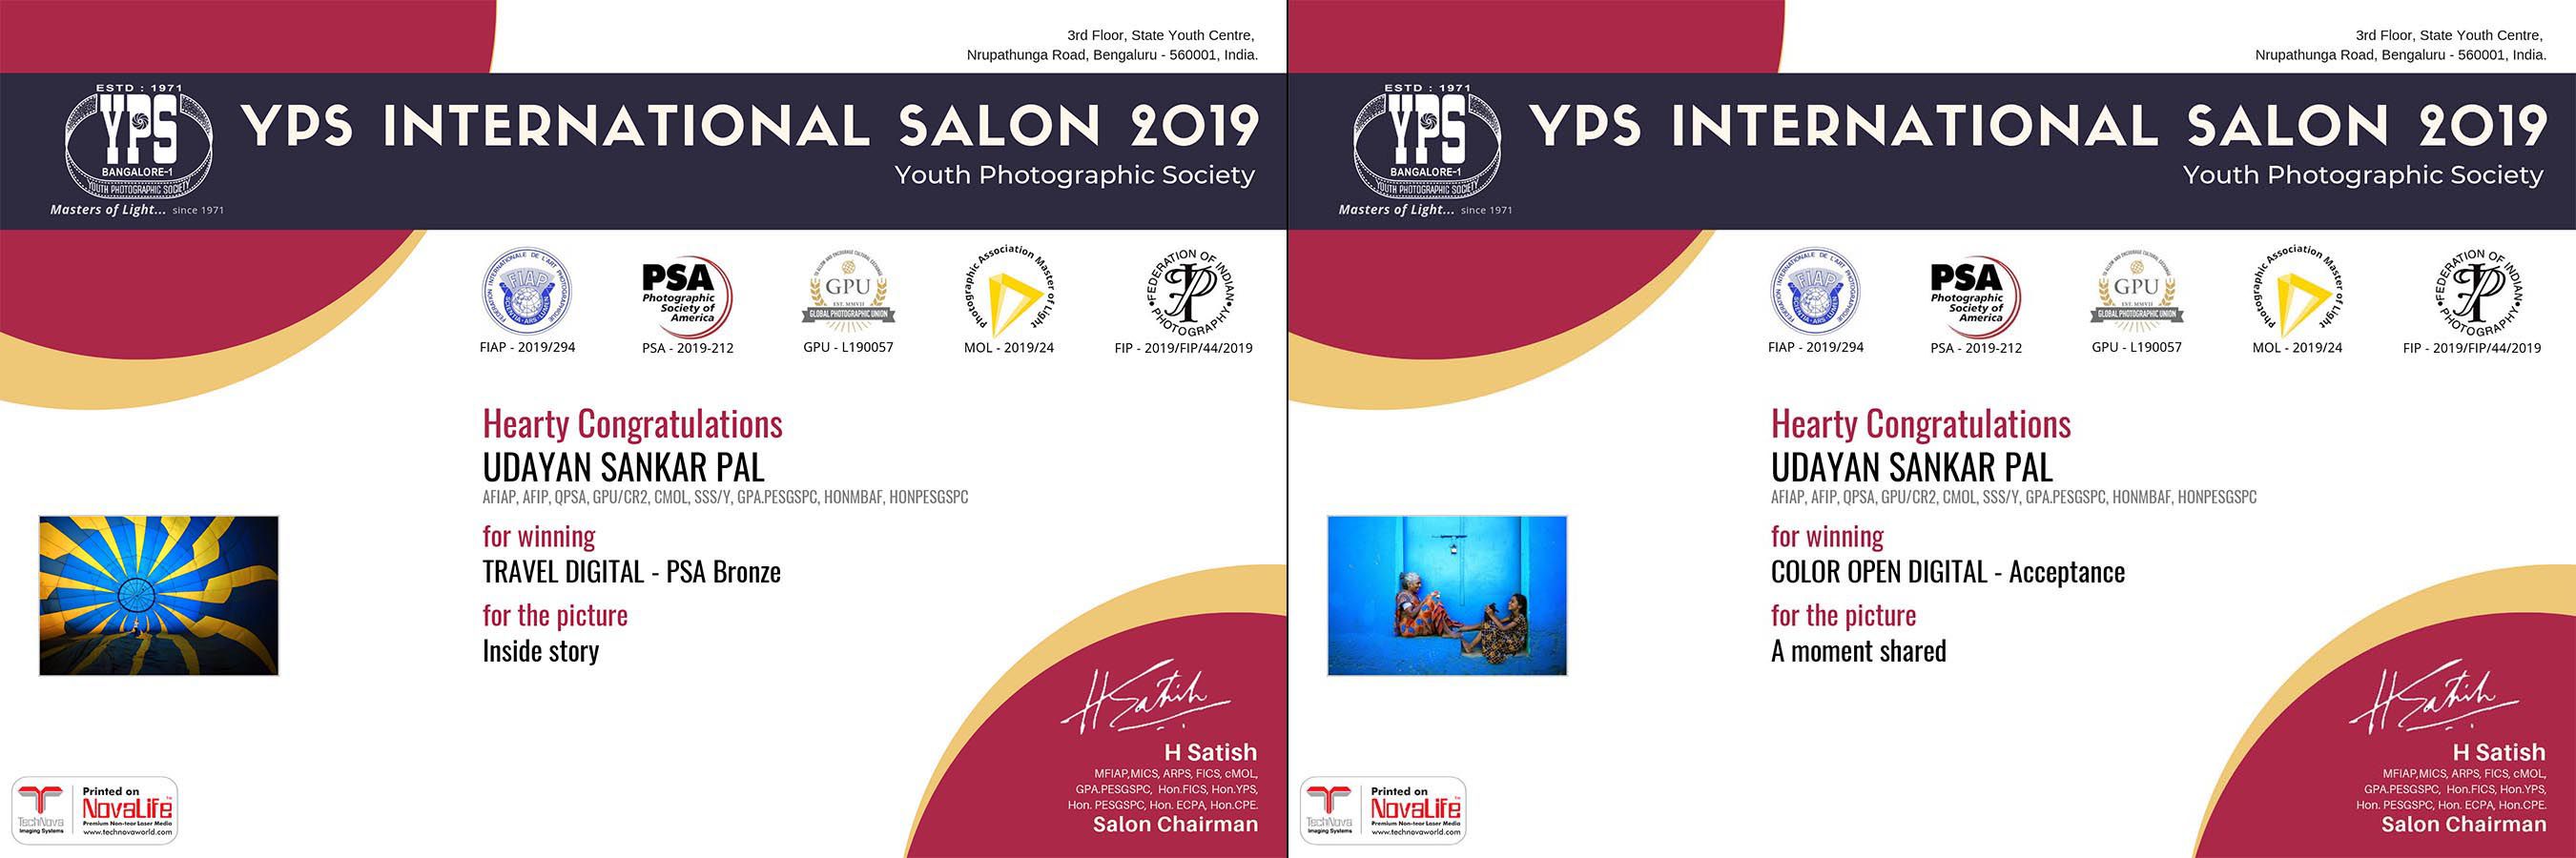 YPS International Salon-2019